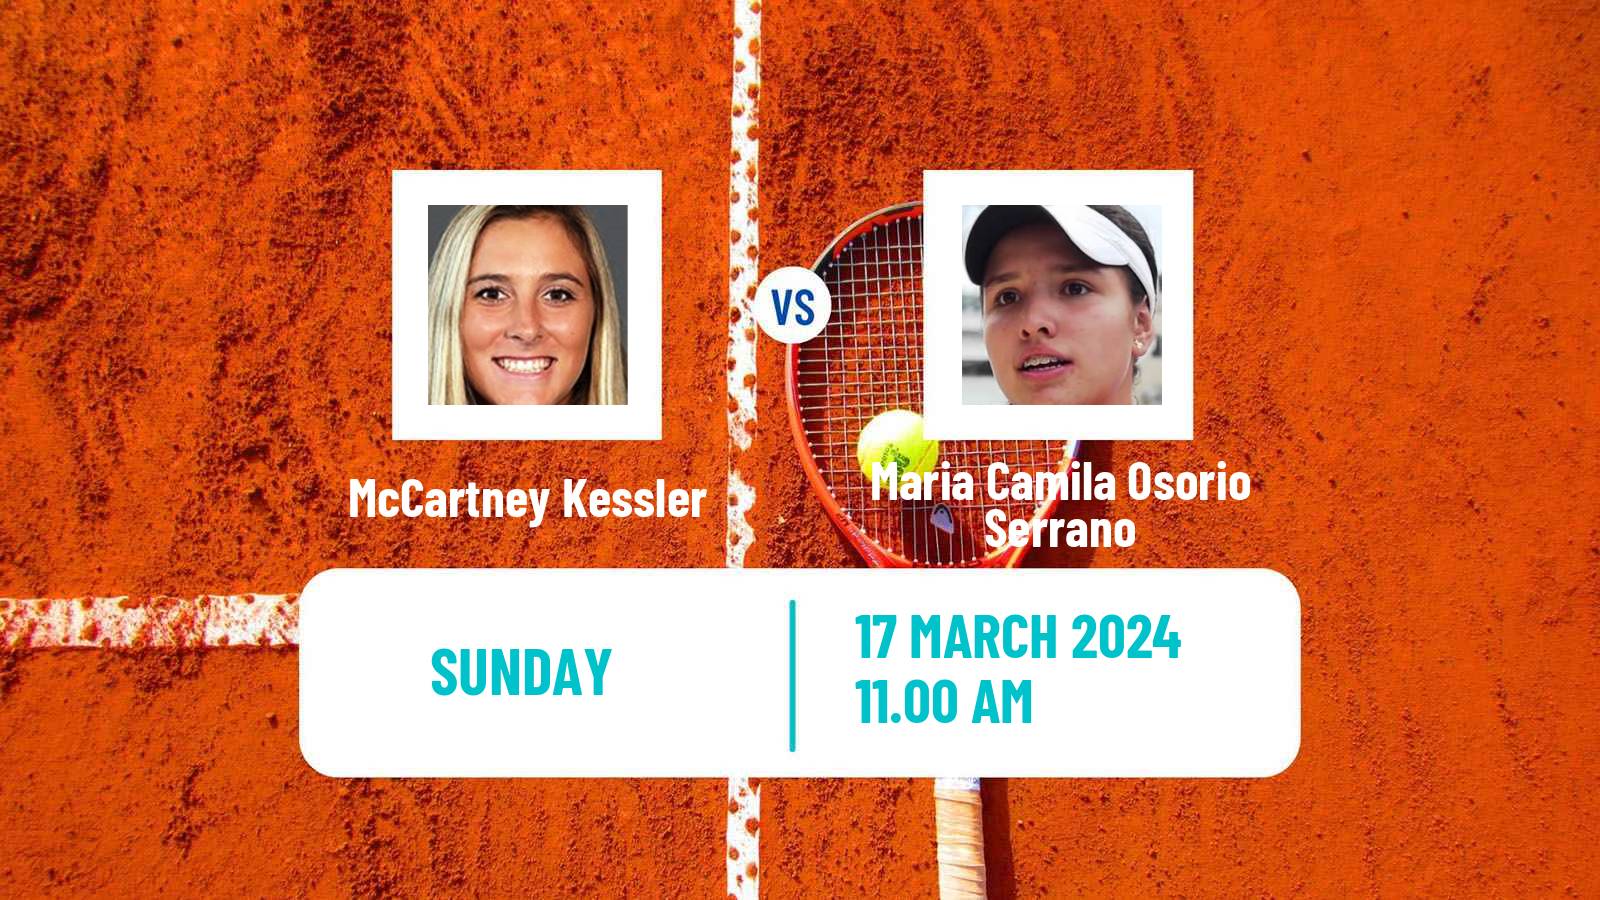 Tennis WTA Miami McCartney Kessler - Maria Camila Osorio Serrano